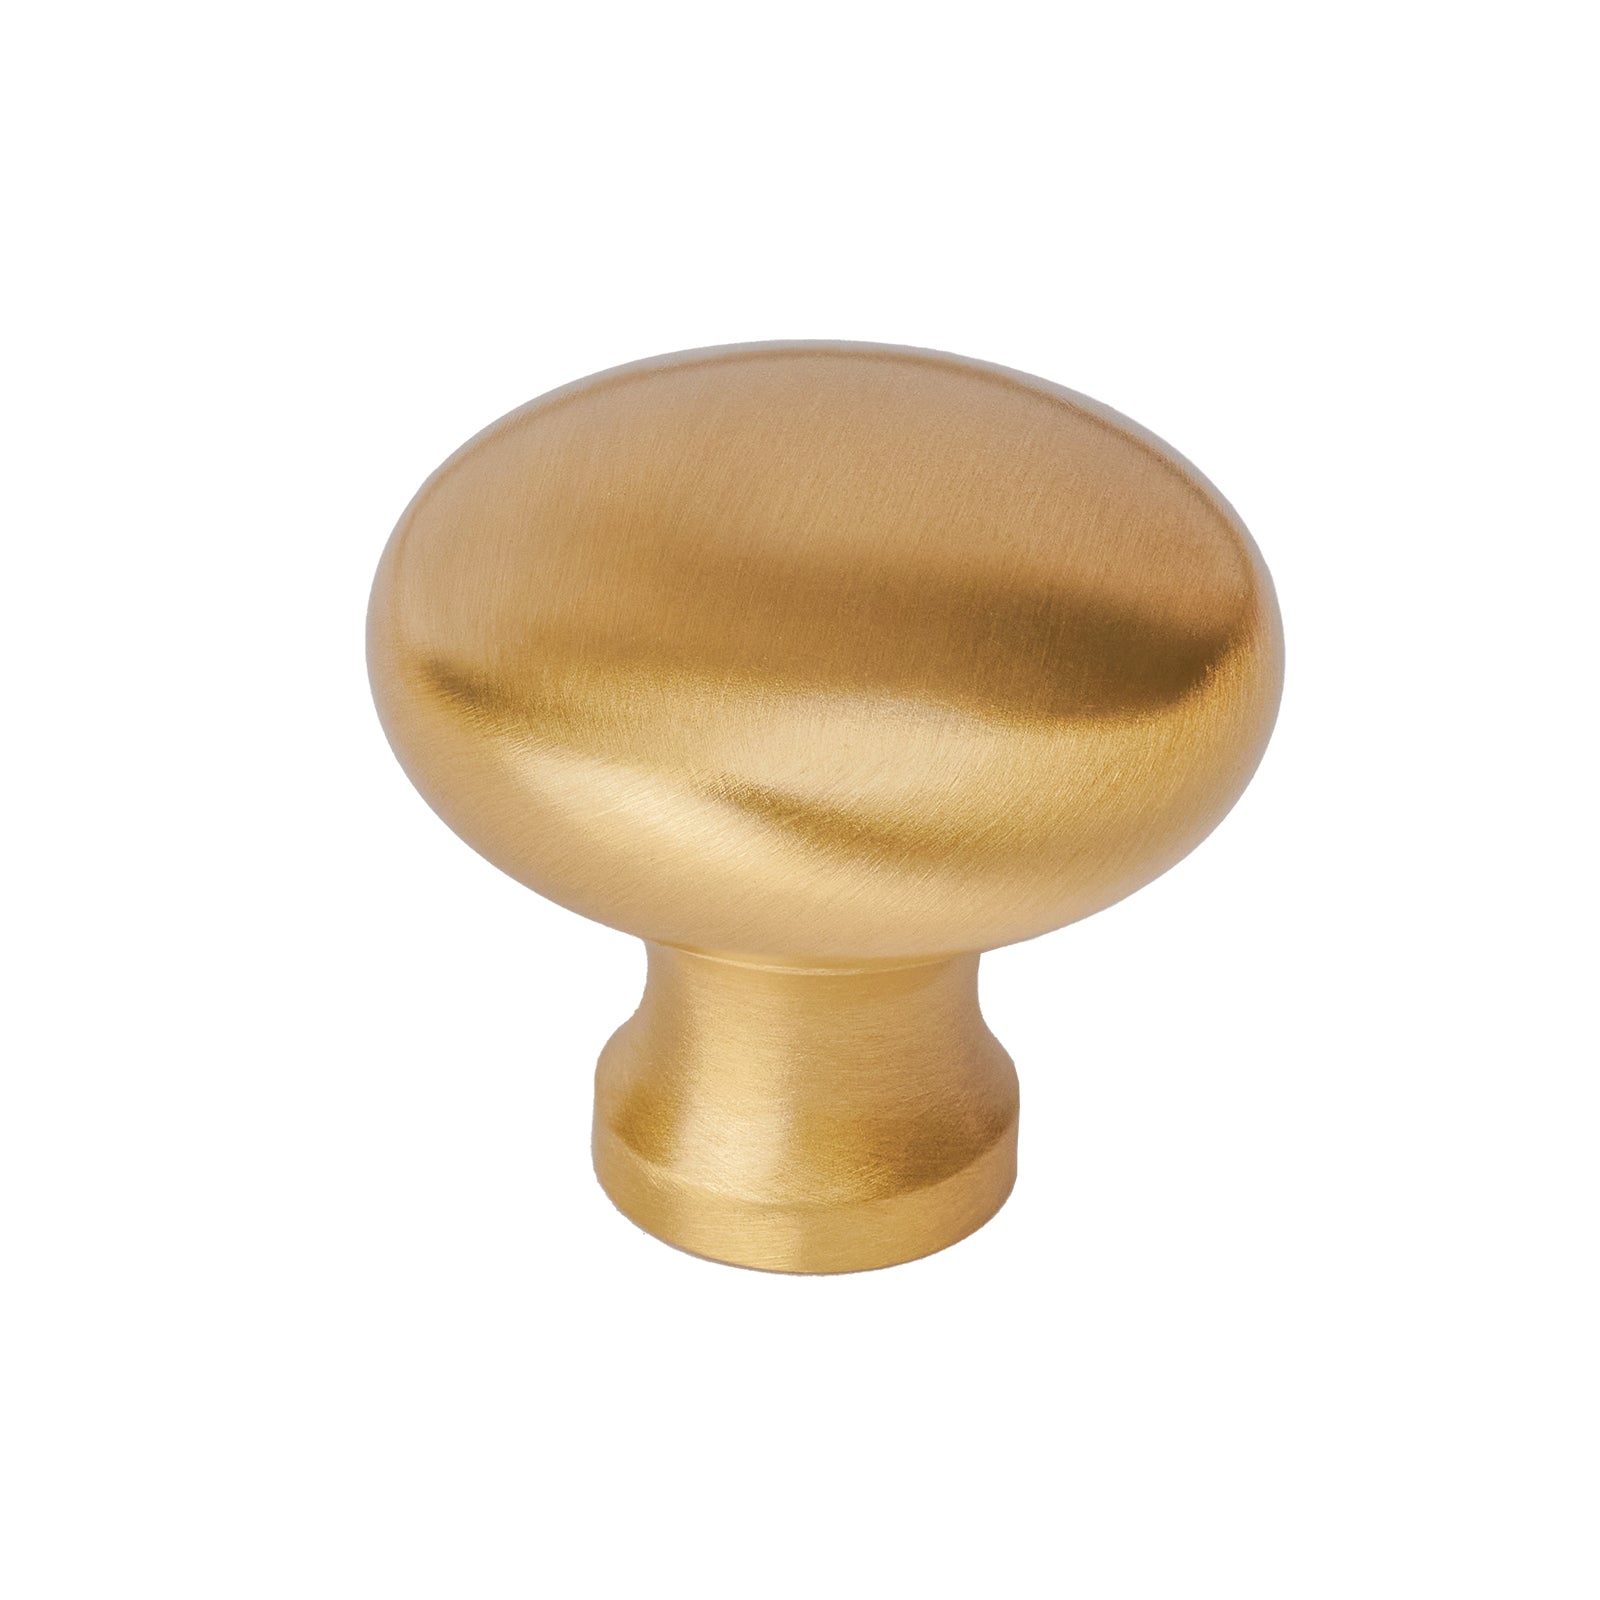 satin brass cabinet knob